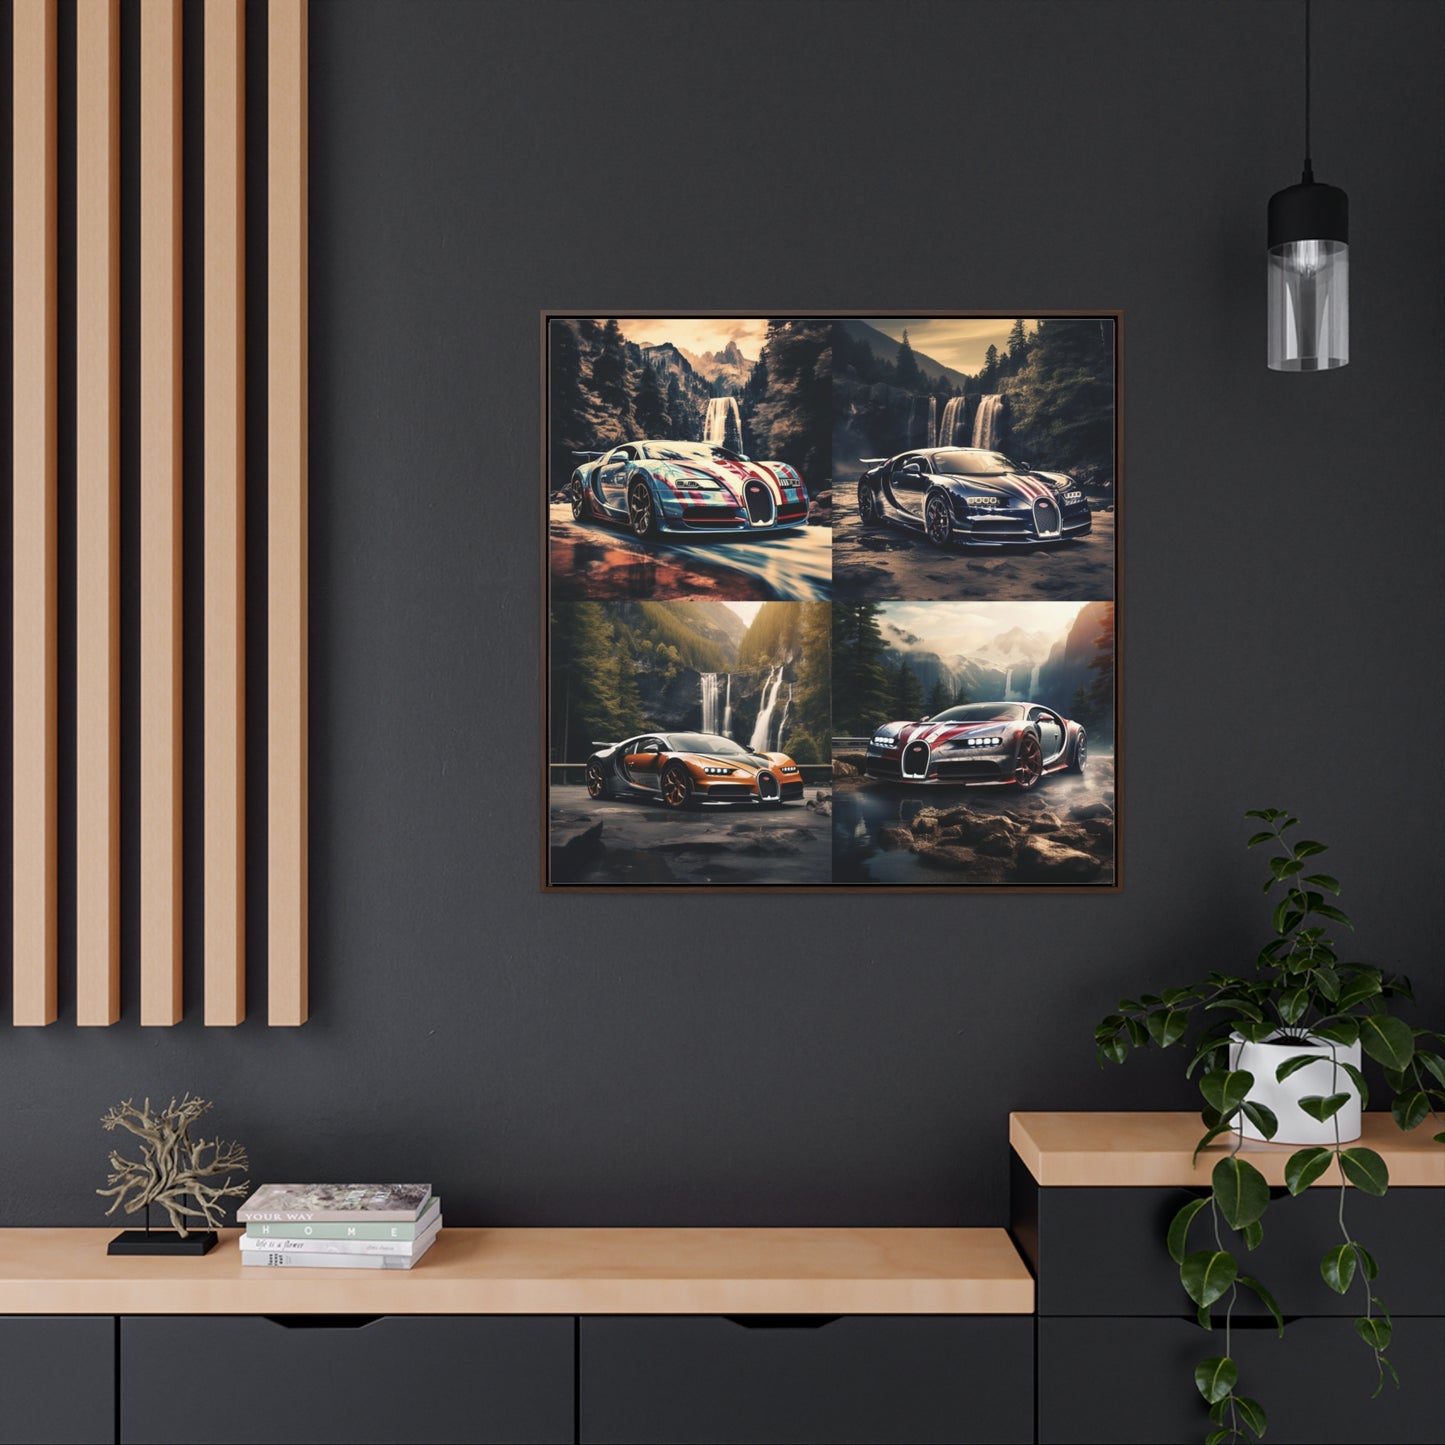 Gallery Canvas Wraps, Square Frame Bugatti Waterfall 5